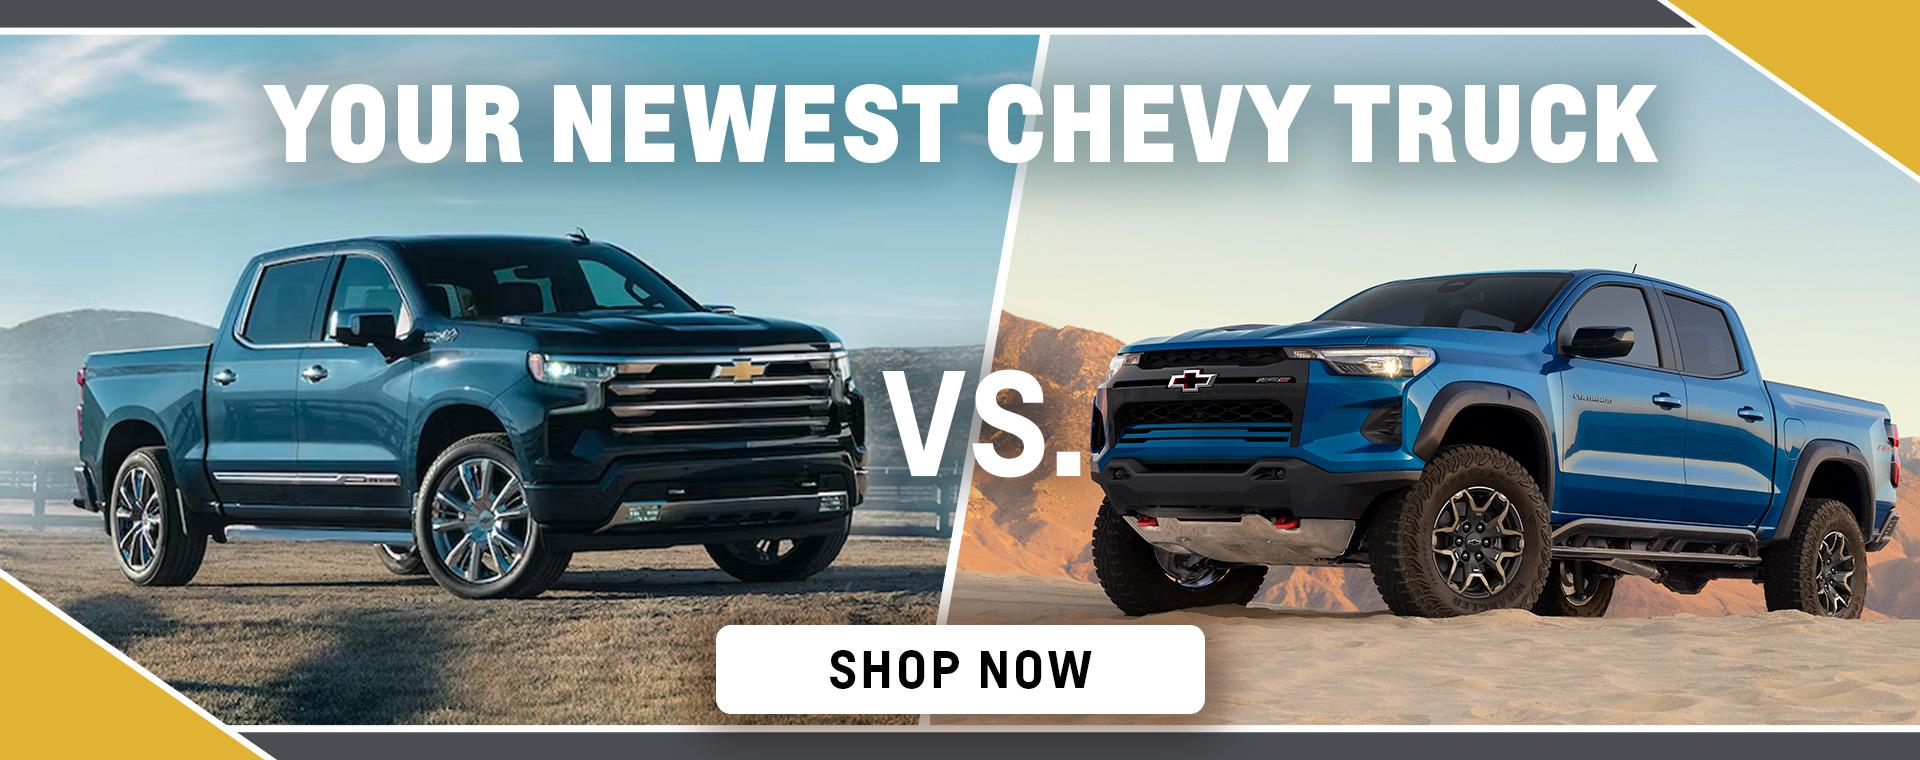 Chevy Silverado vs. Chevy Colorado